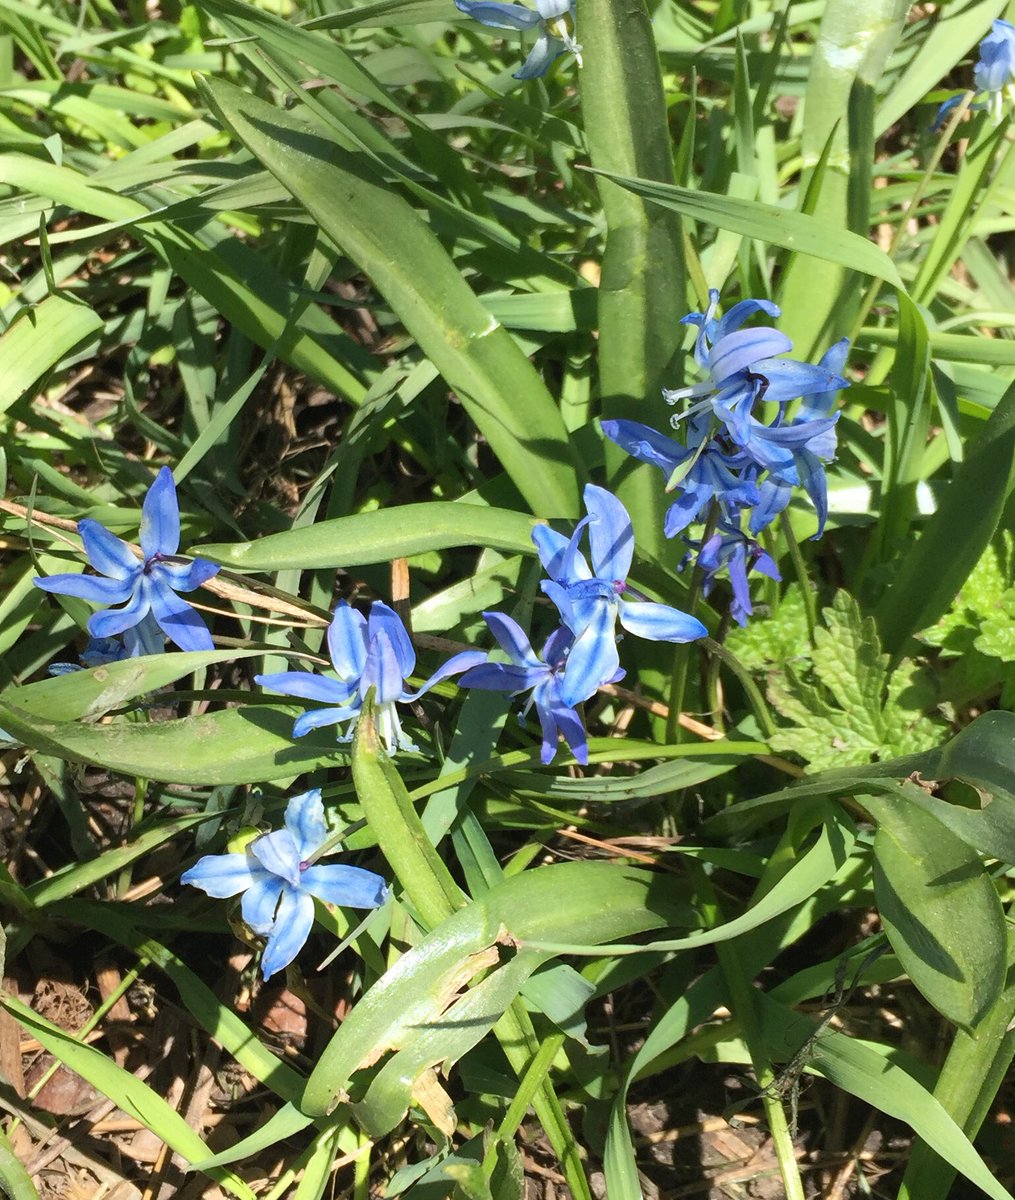 #educatorsONtherun #RWRunStreak Day 1612 A sunny 3.4 miles (5.4 km) run to end the work week. My reward was a view of the beautiful blue Scilla flowers. #RunEveryDay